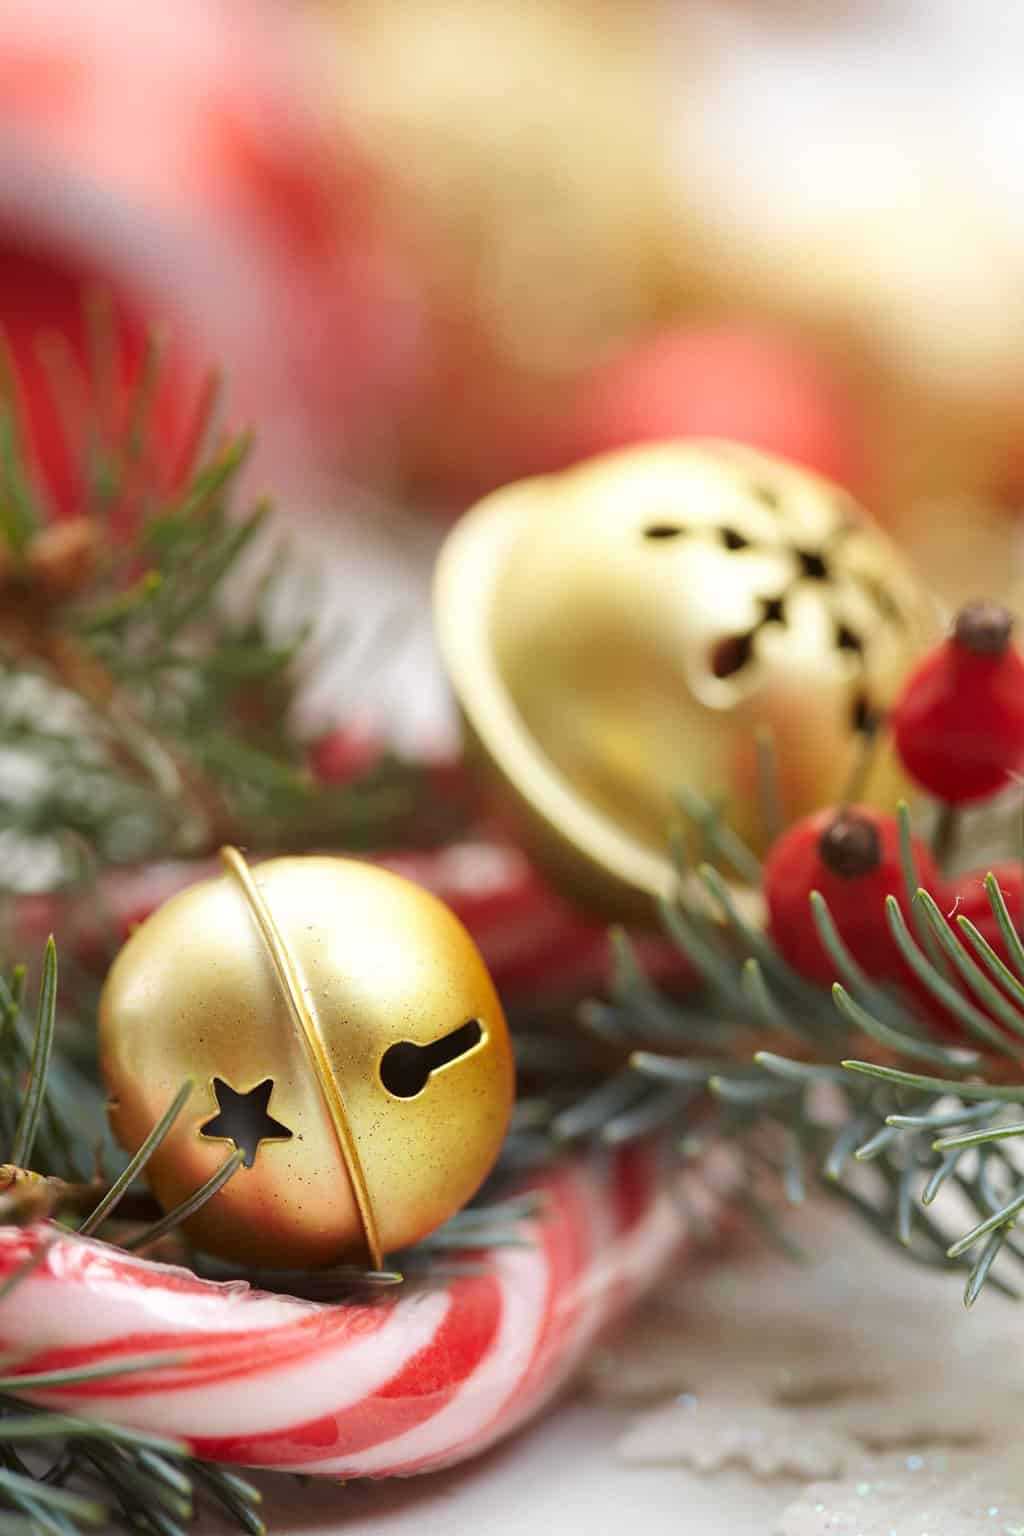 Cozy Christmas Bell Decor: Decorative Bells & More